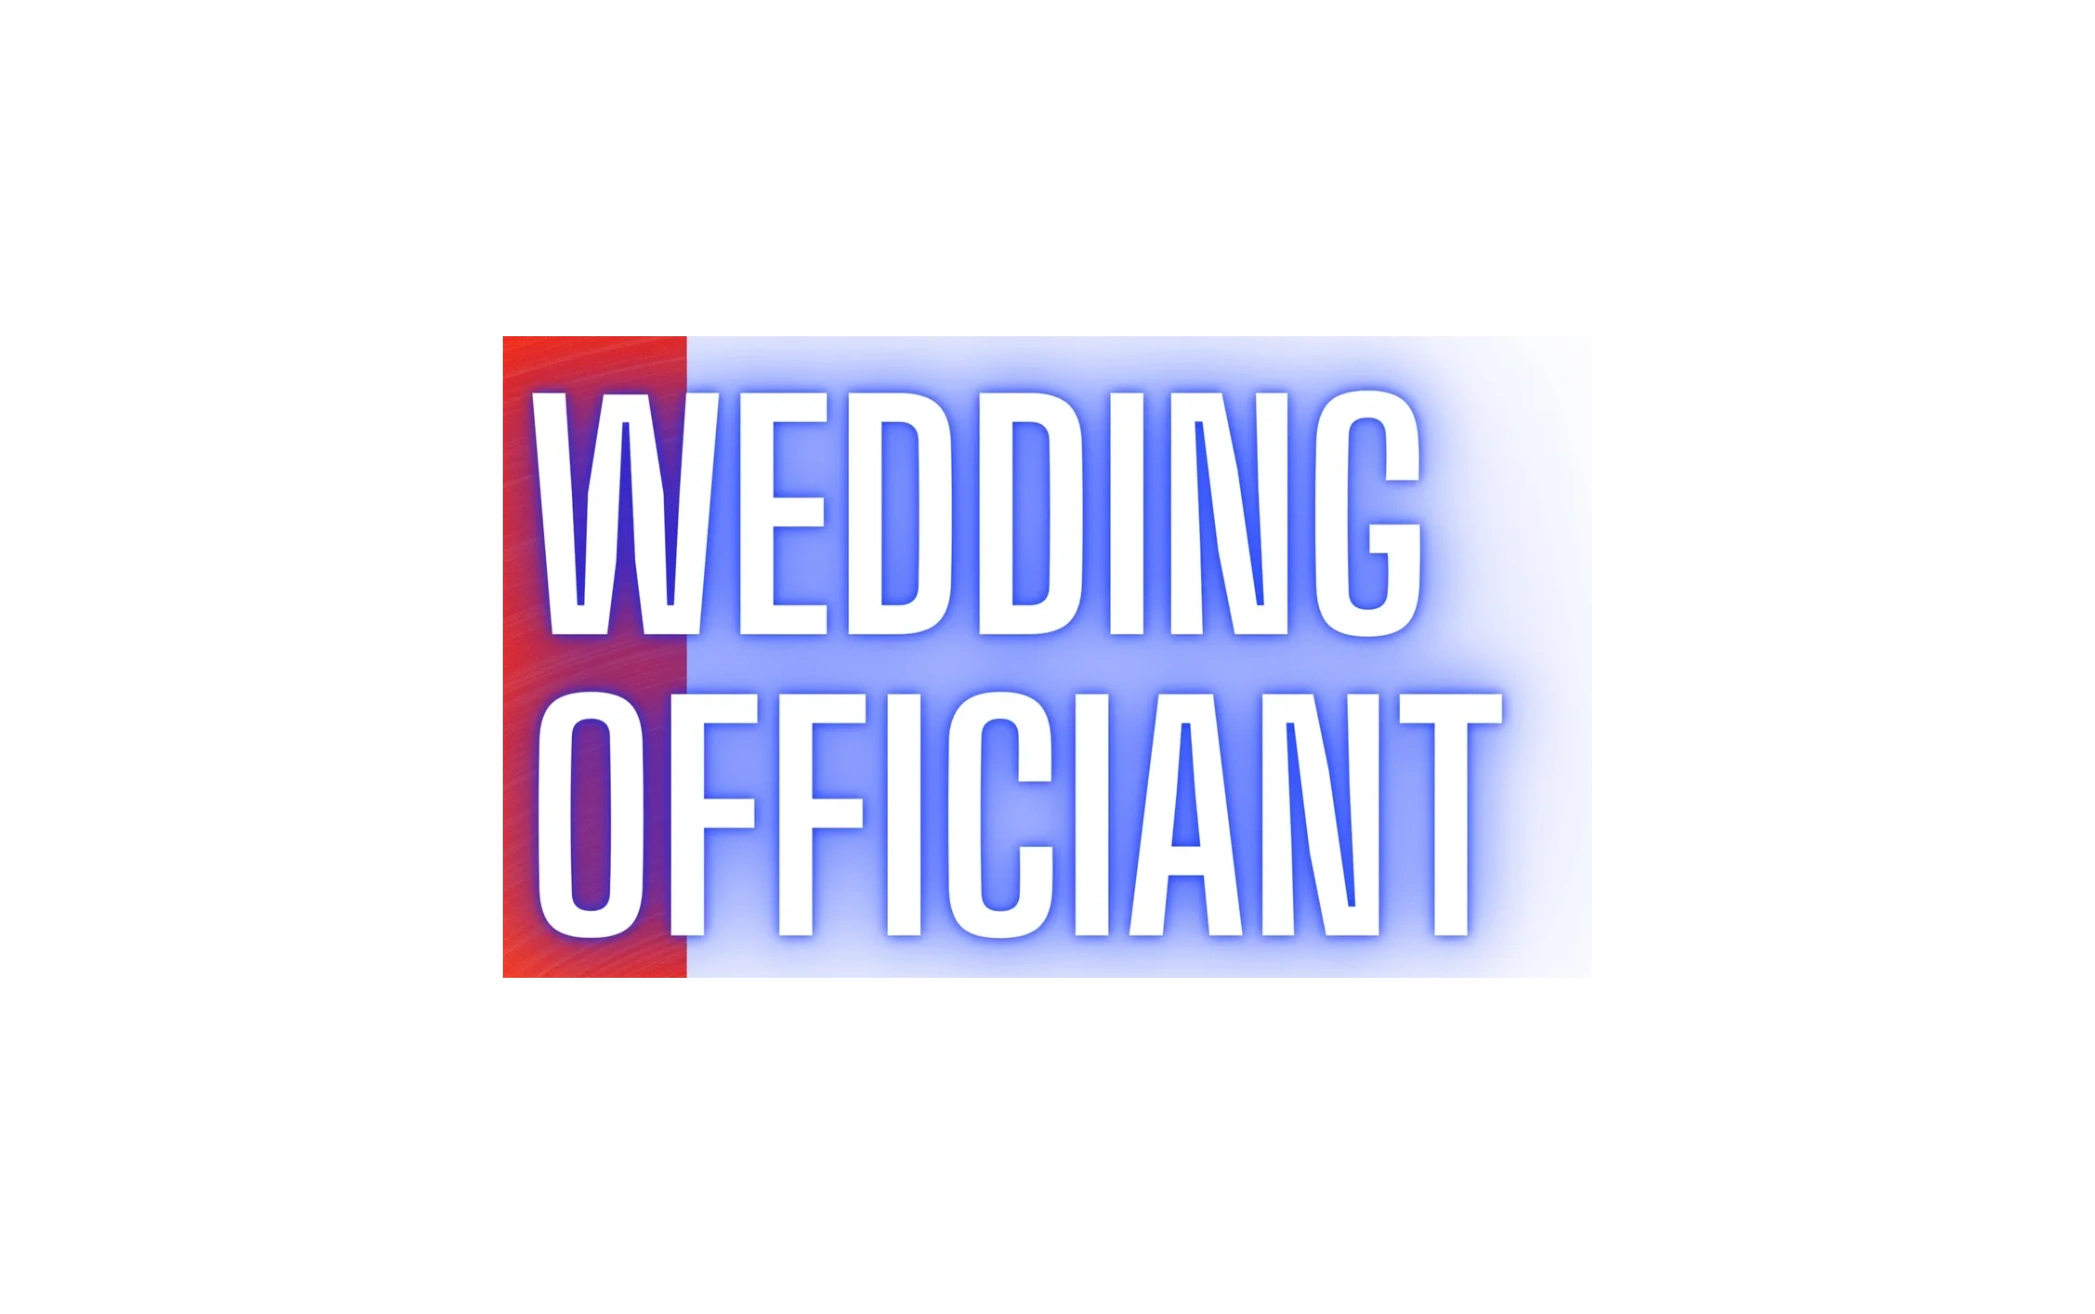 Wedding officiant Nashville
marriage Nashville
marriage officiant
Marriage notary
Nashville notary 